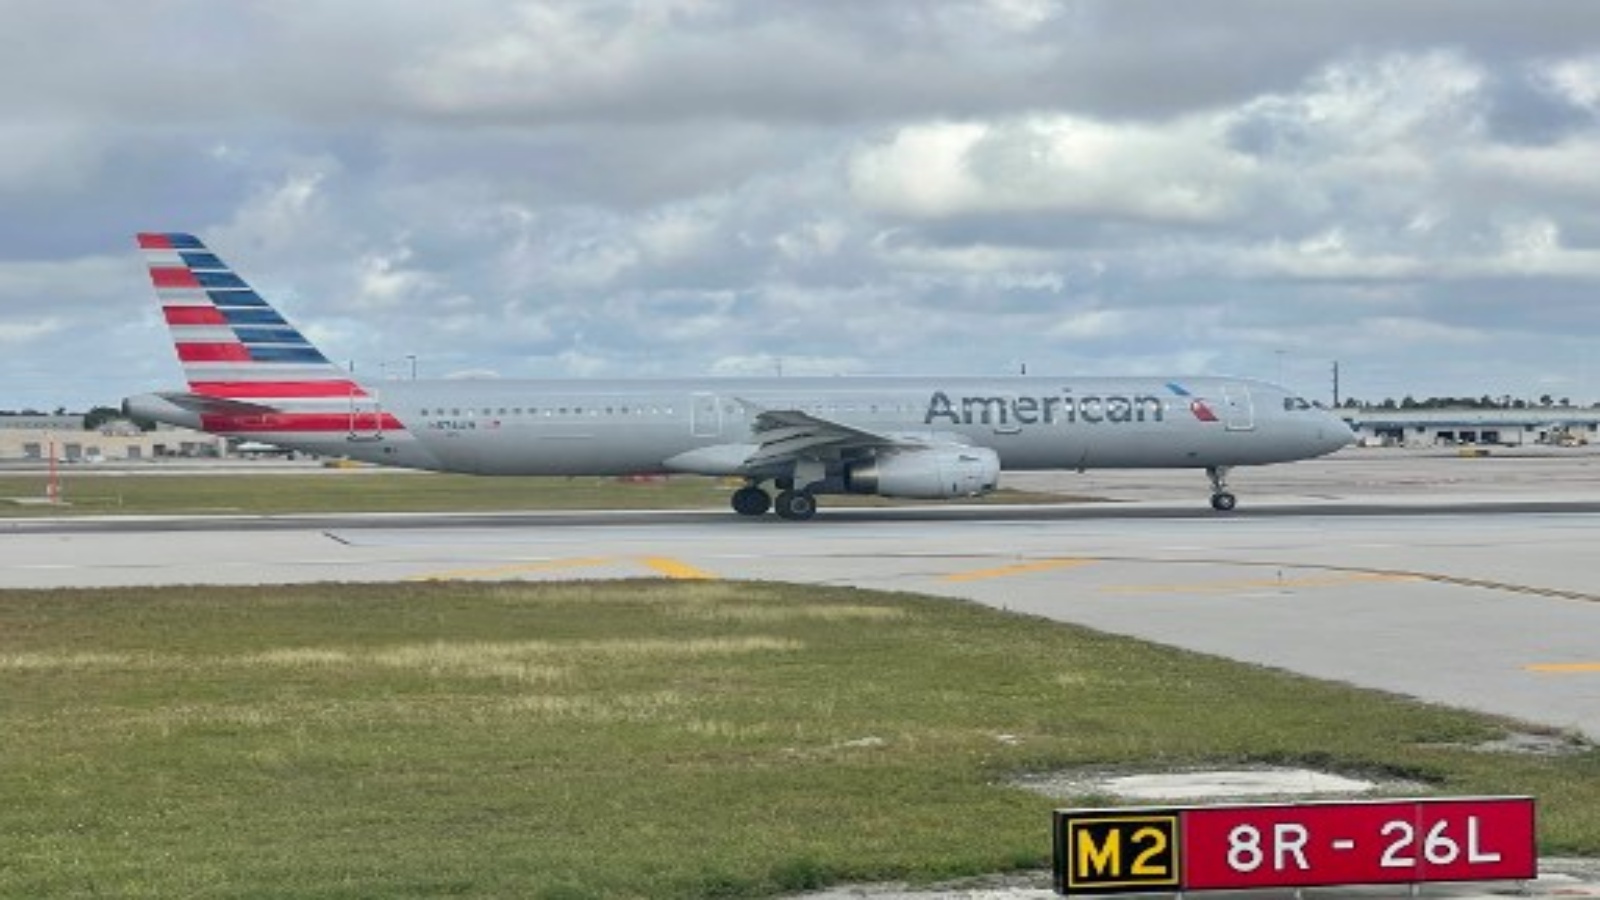 طائرة تابعة لشركة American Airlines Airbus a321 تفرض ضرائب على مدرج مطار ميامي الدولي (MIA) في 24 ديسمبر 2020 في ميامي ، فلوريدا.